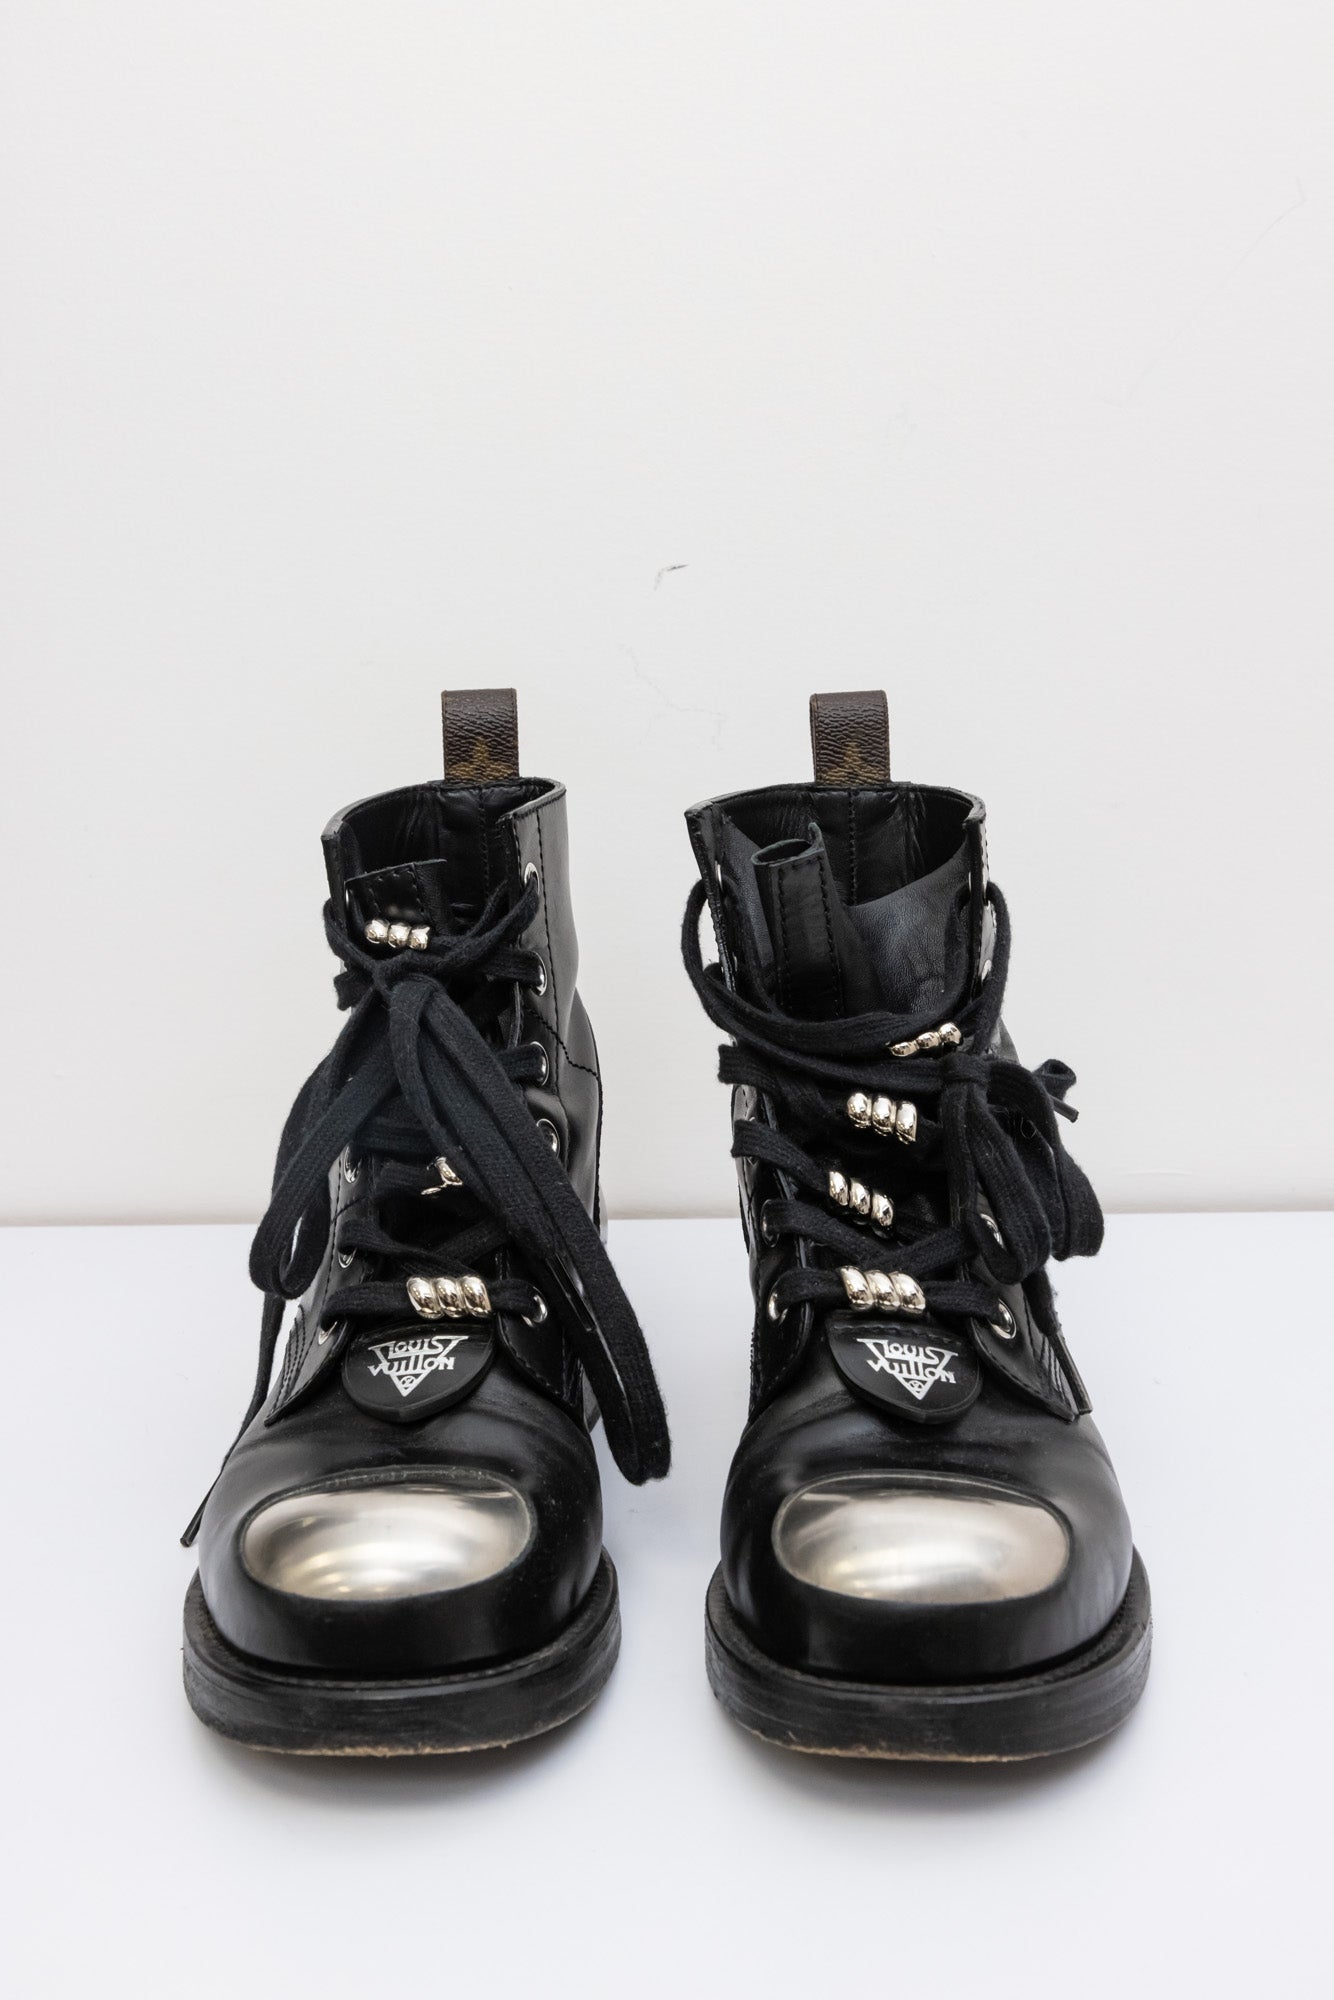 LOUIS VUITTON נעלי מטרופוליס קנבס מונוגרמה | מגפי עור שחורים